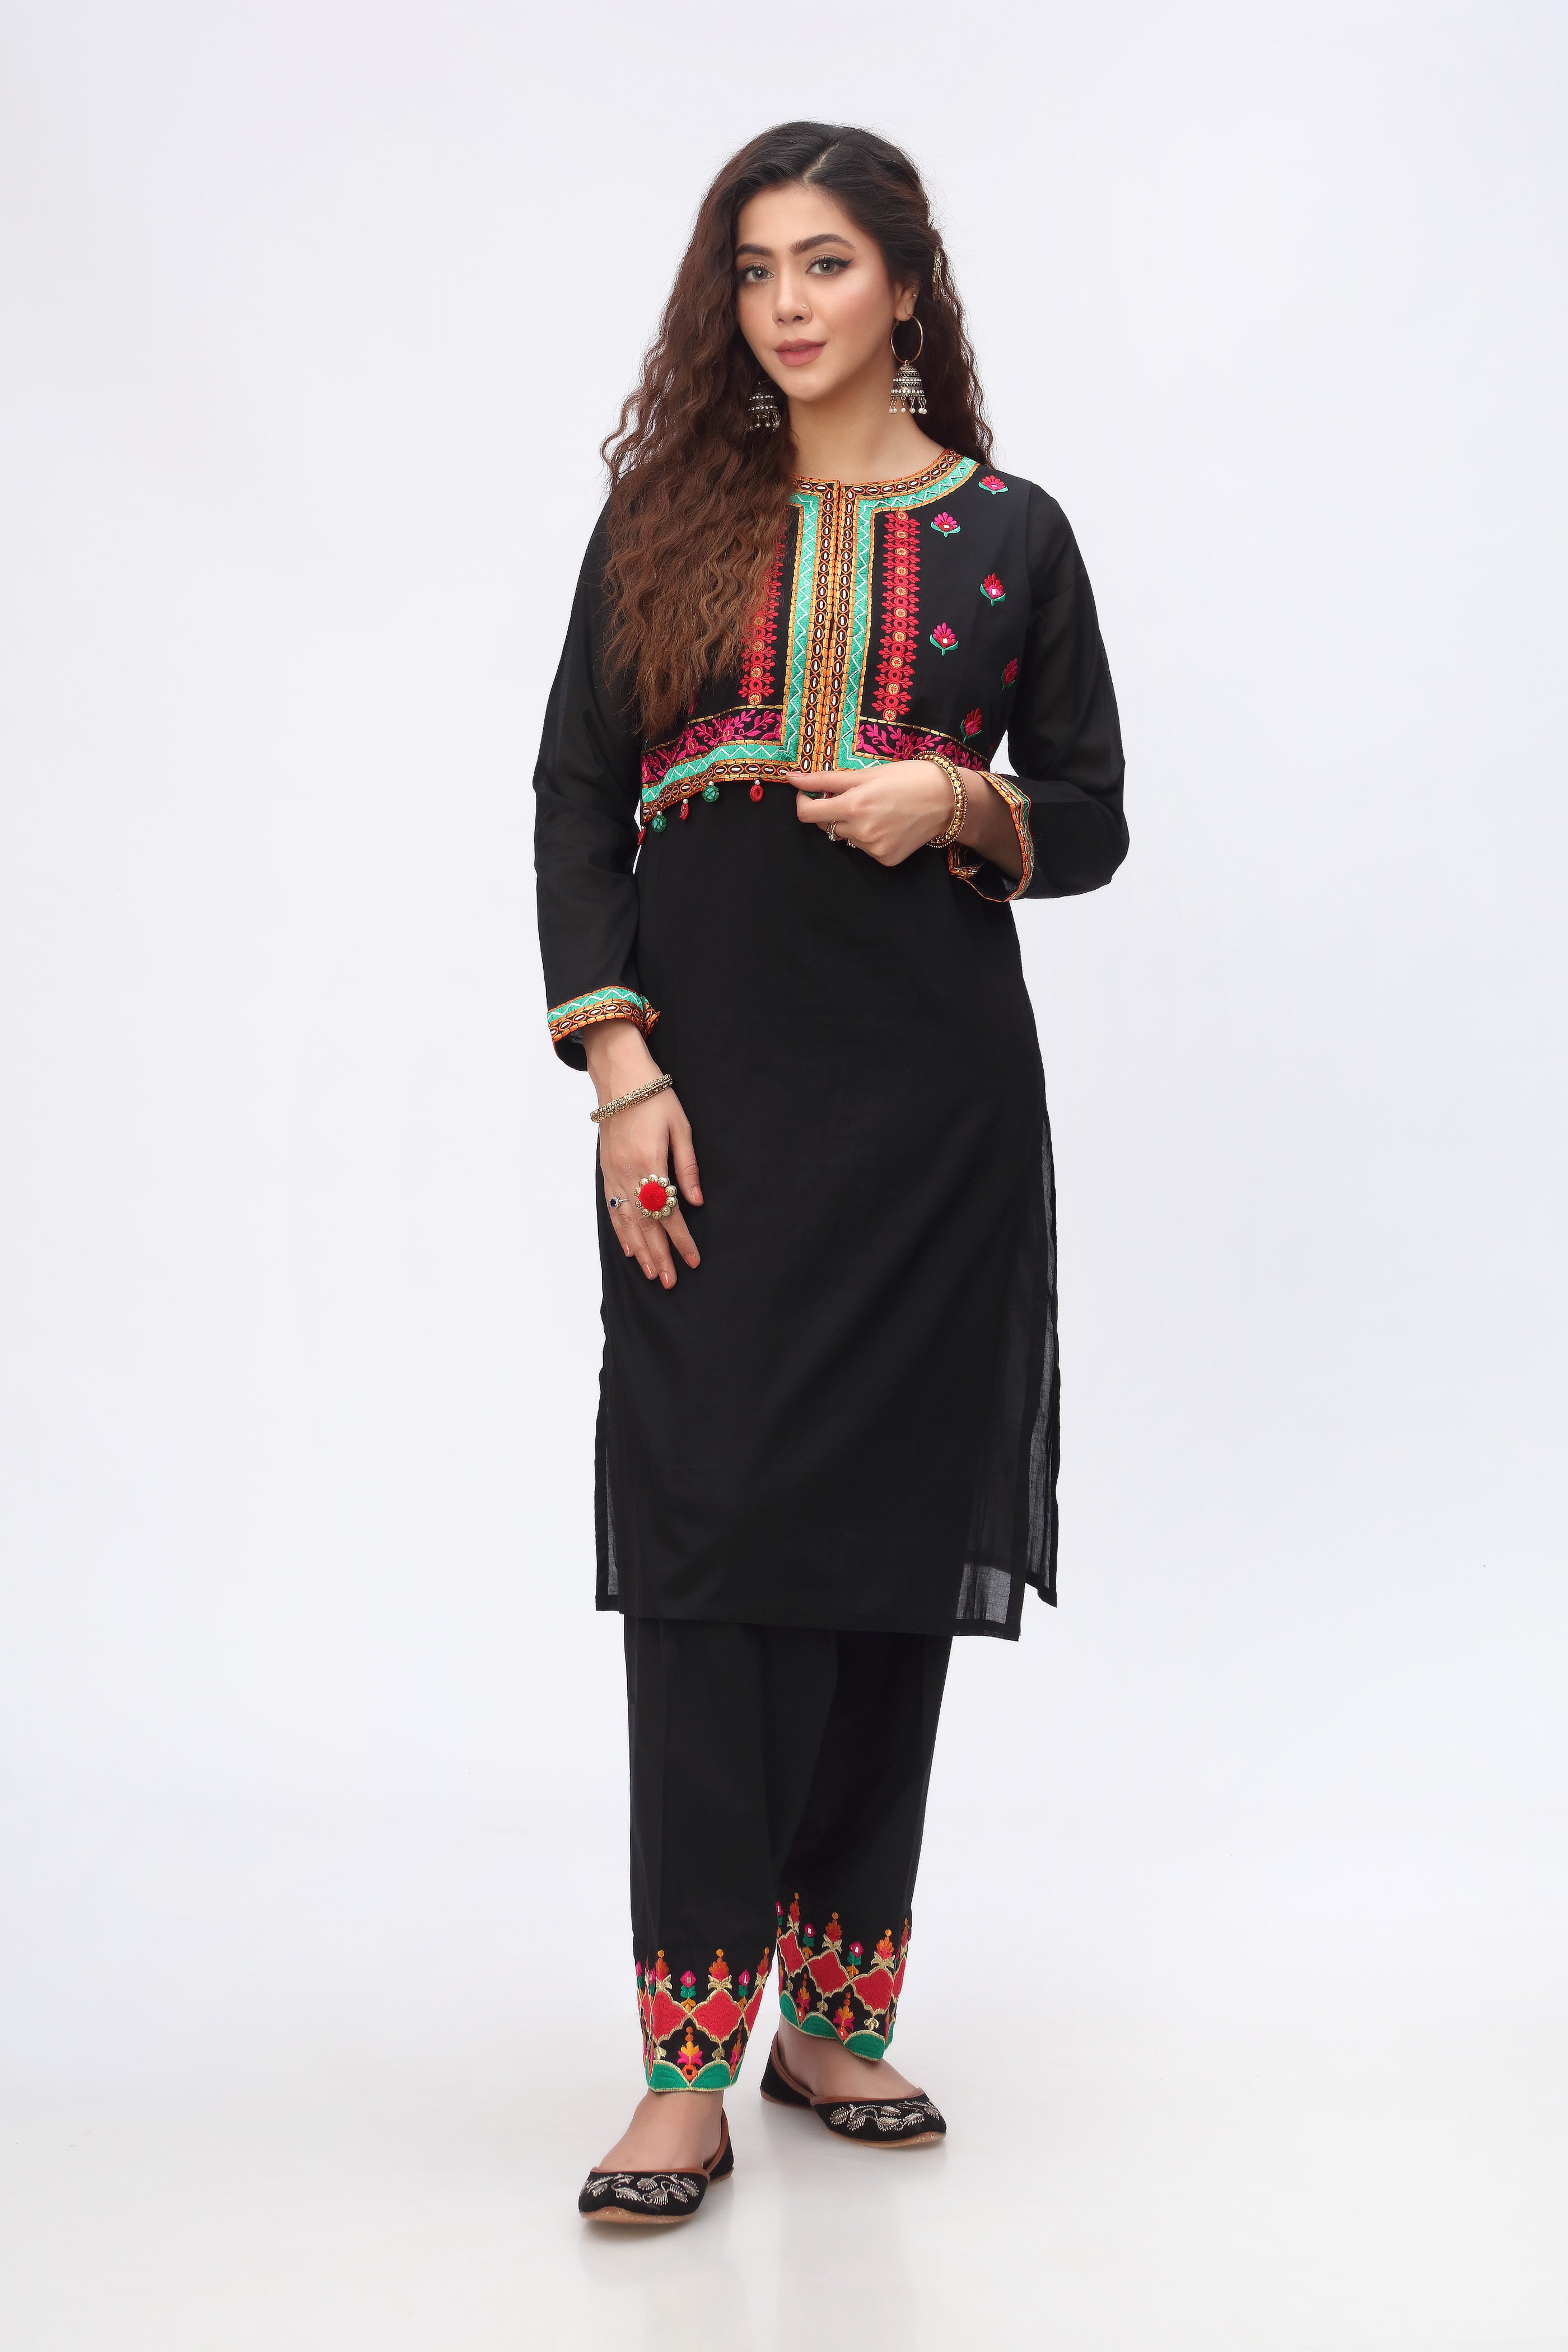 Phulkari Koti in Black coloured Lawn fabric